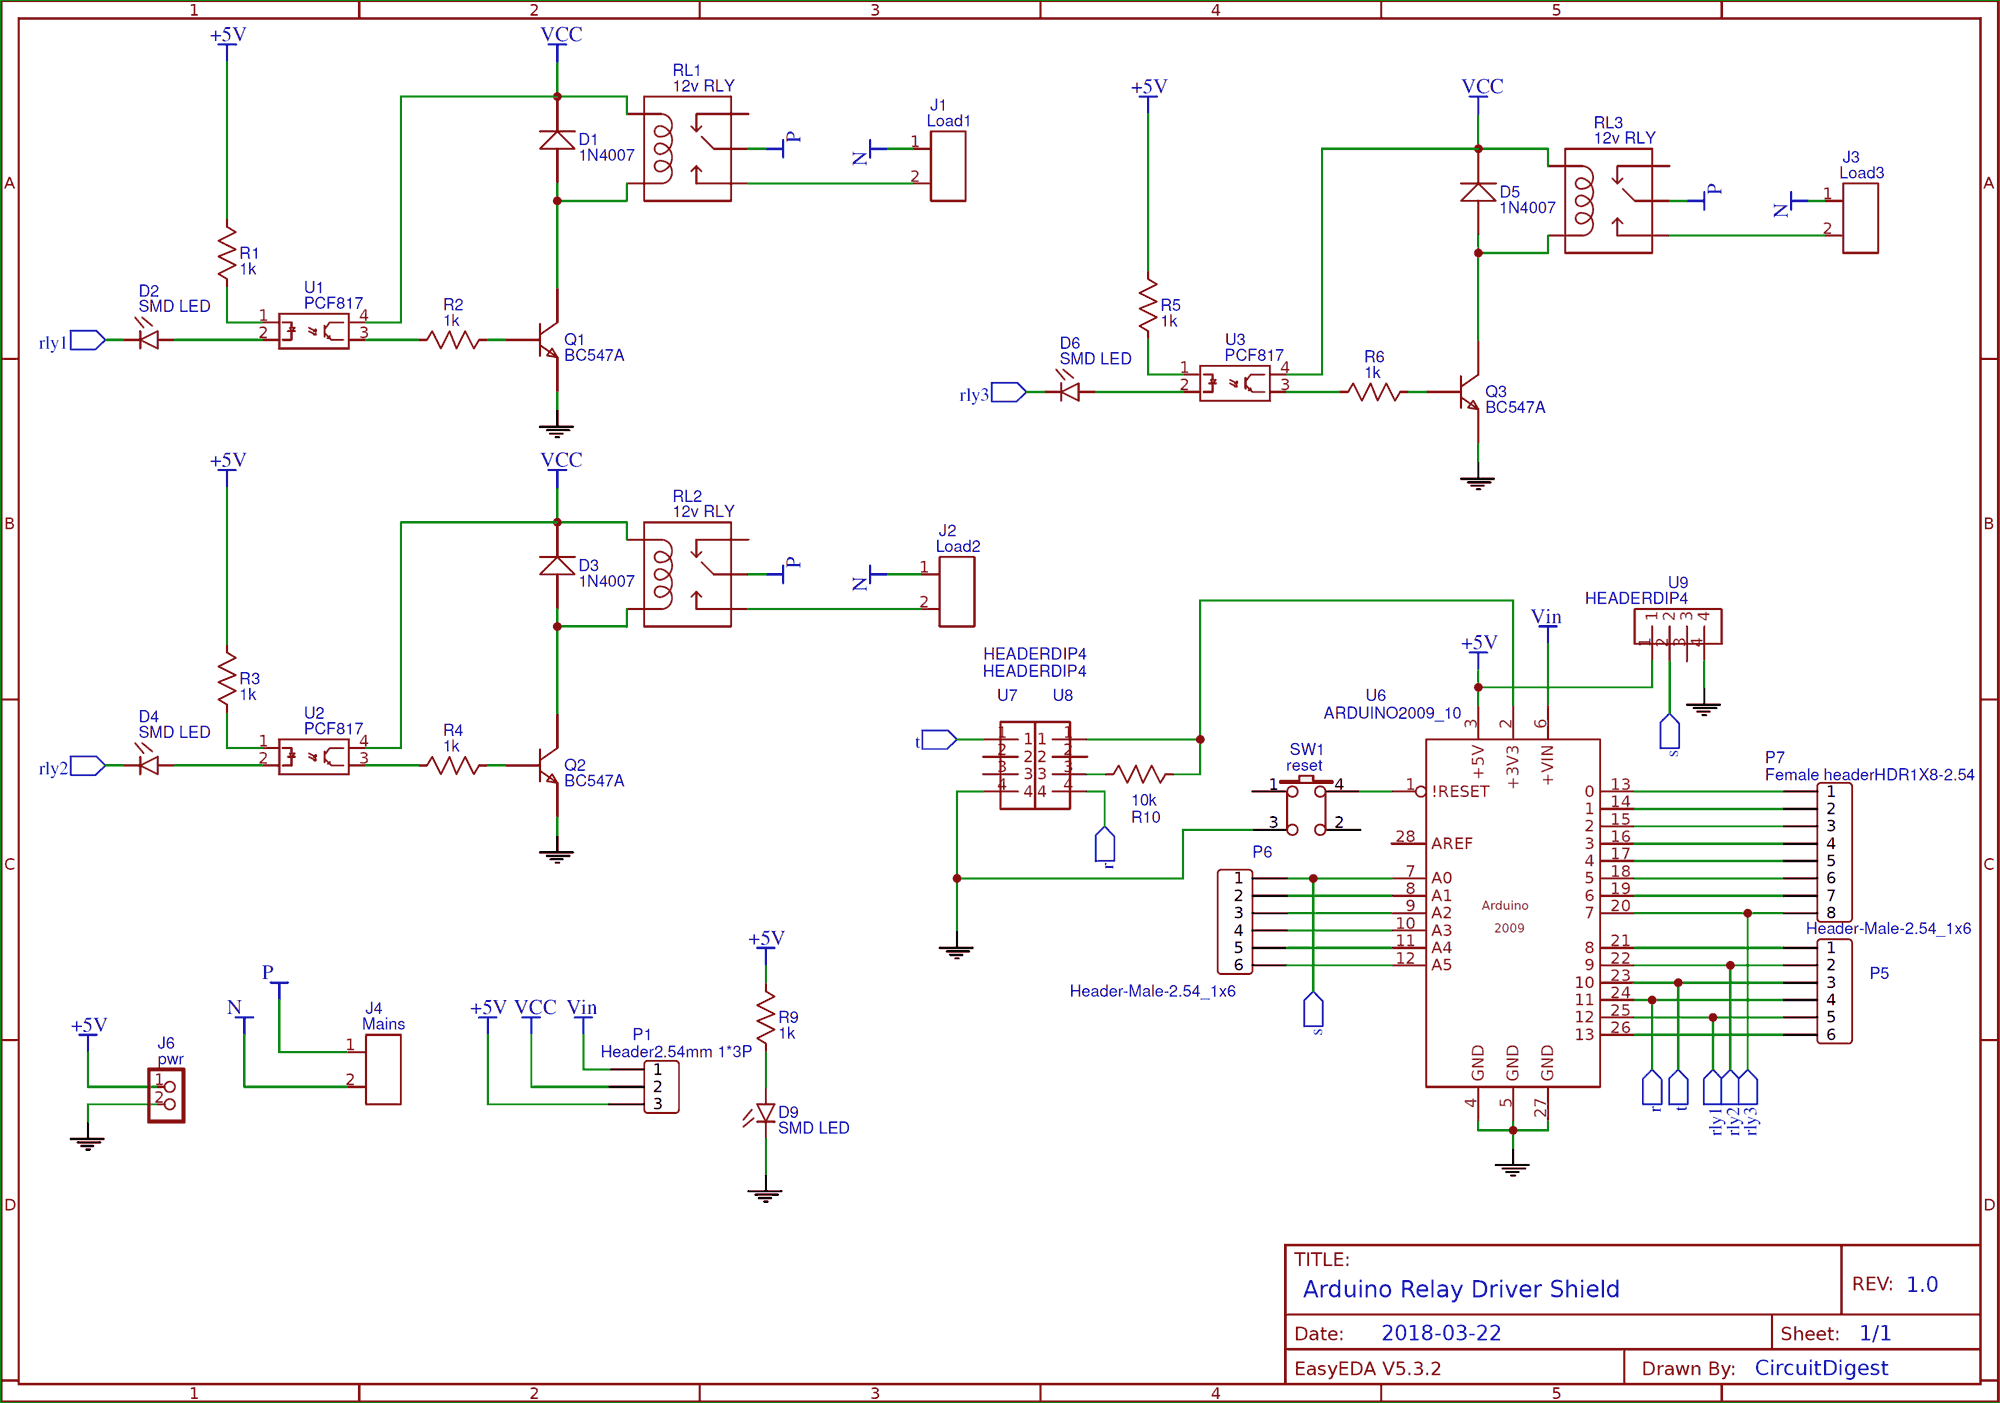 Circuit diagram for DIY Arduino Relay Driver Shield PCB